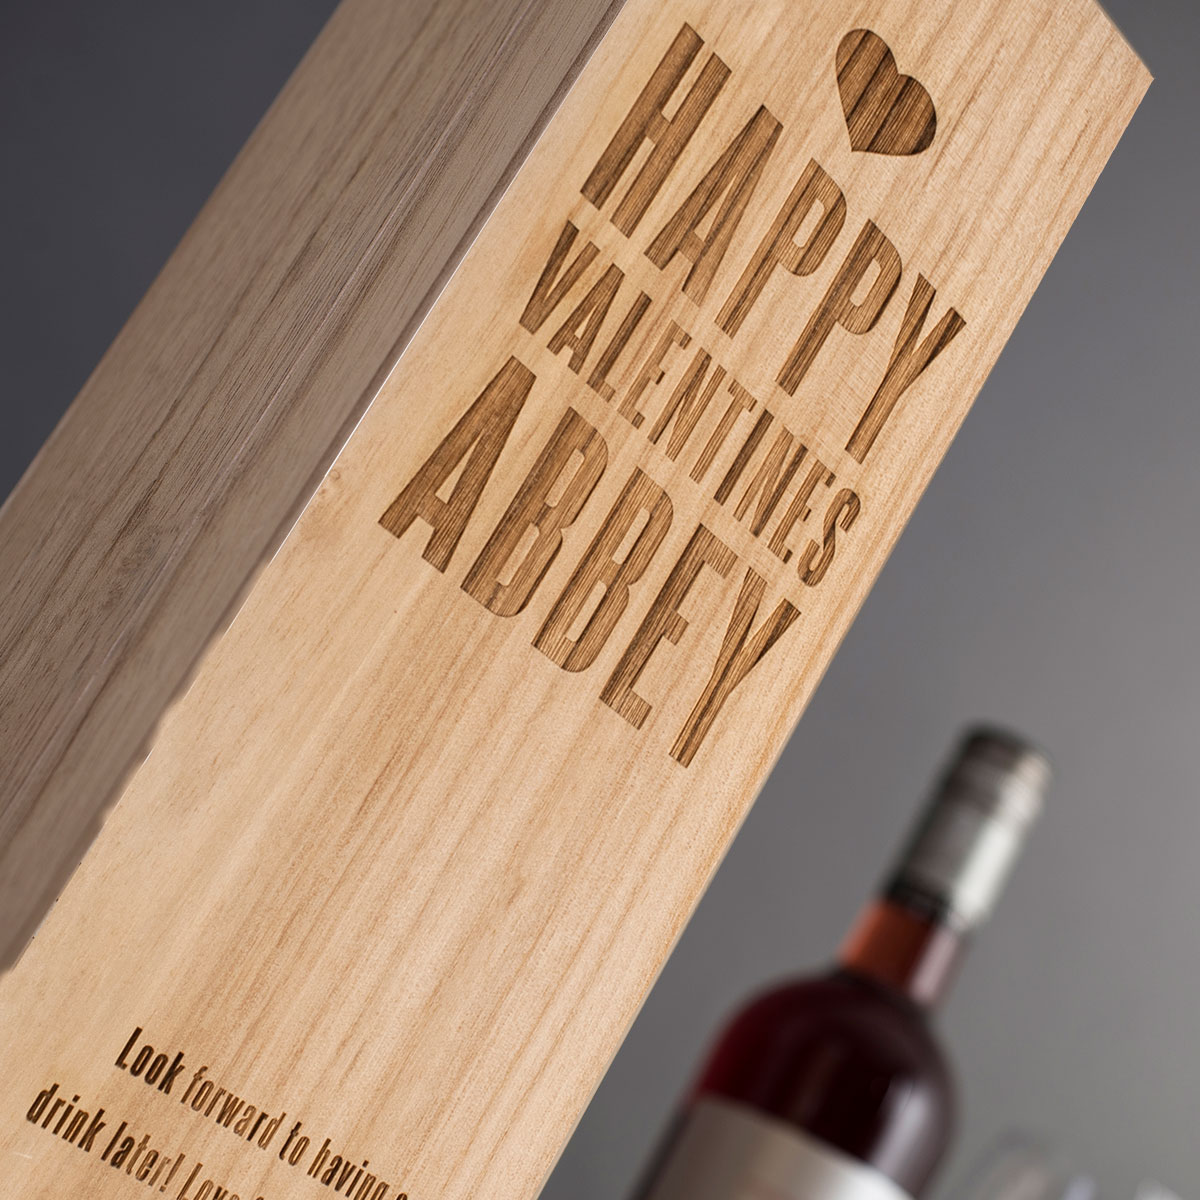 Personalised Luxury Wooden Wine Box - Happy Valentine's Day